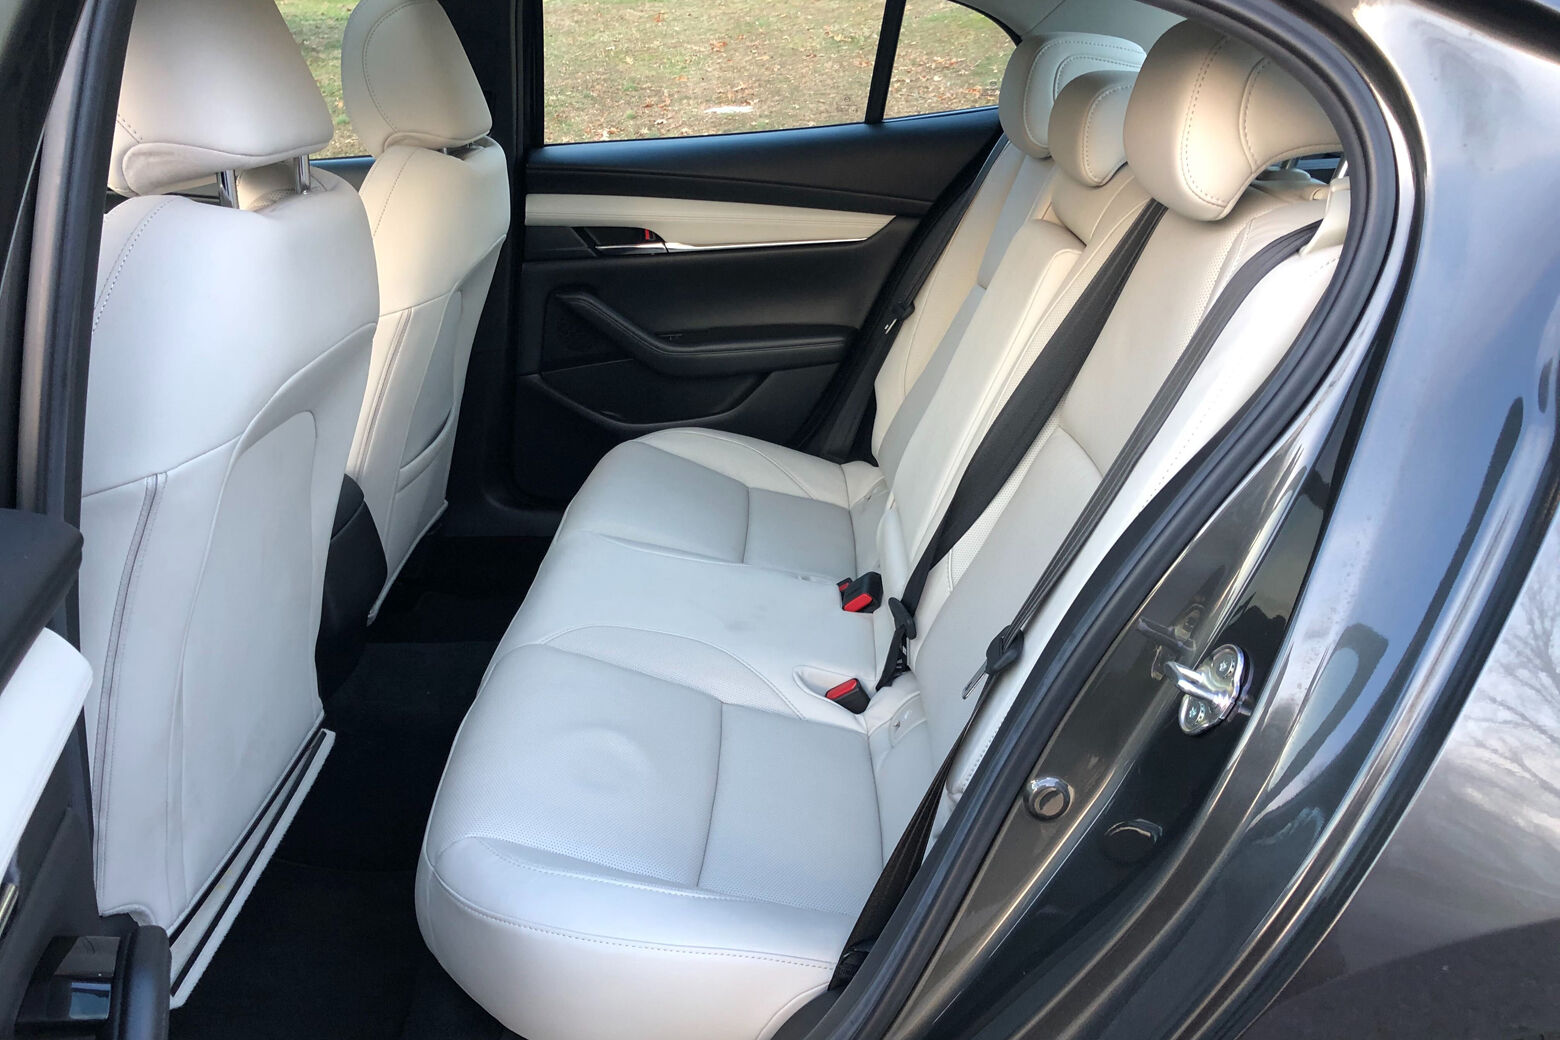 Mazda 3 interior